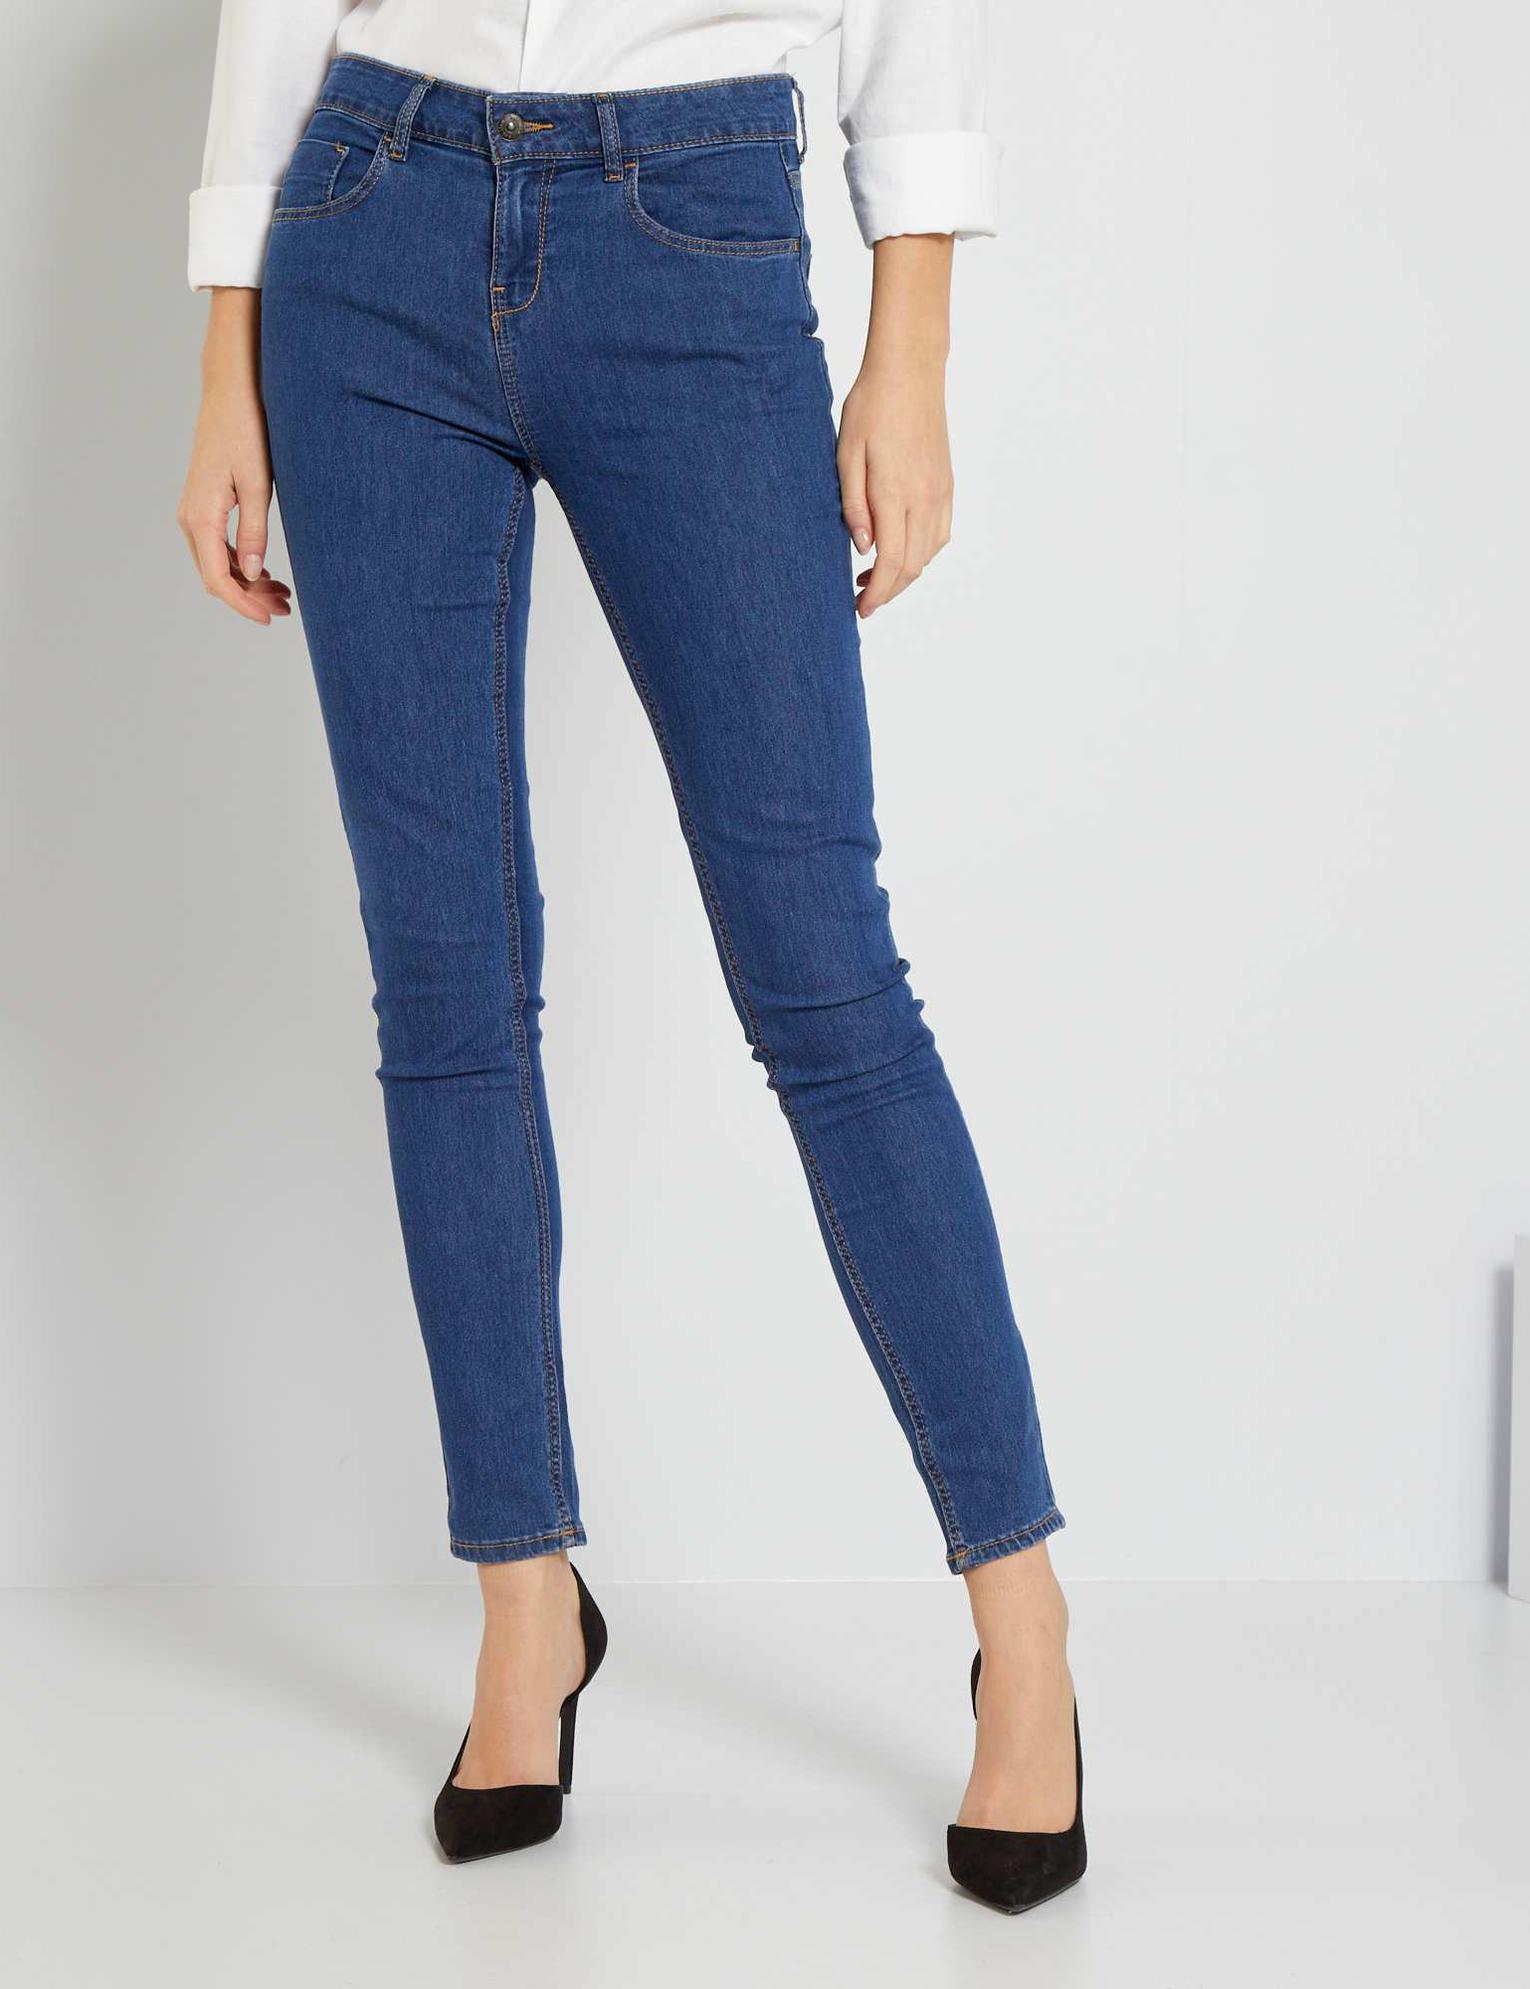 ankle jeans design